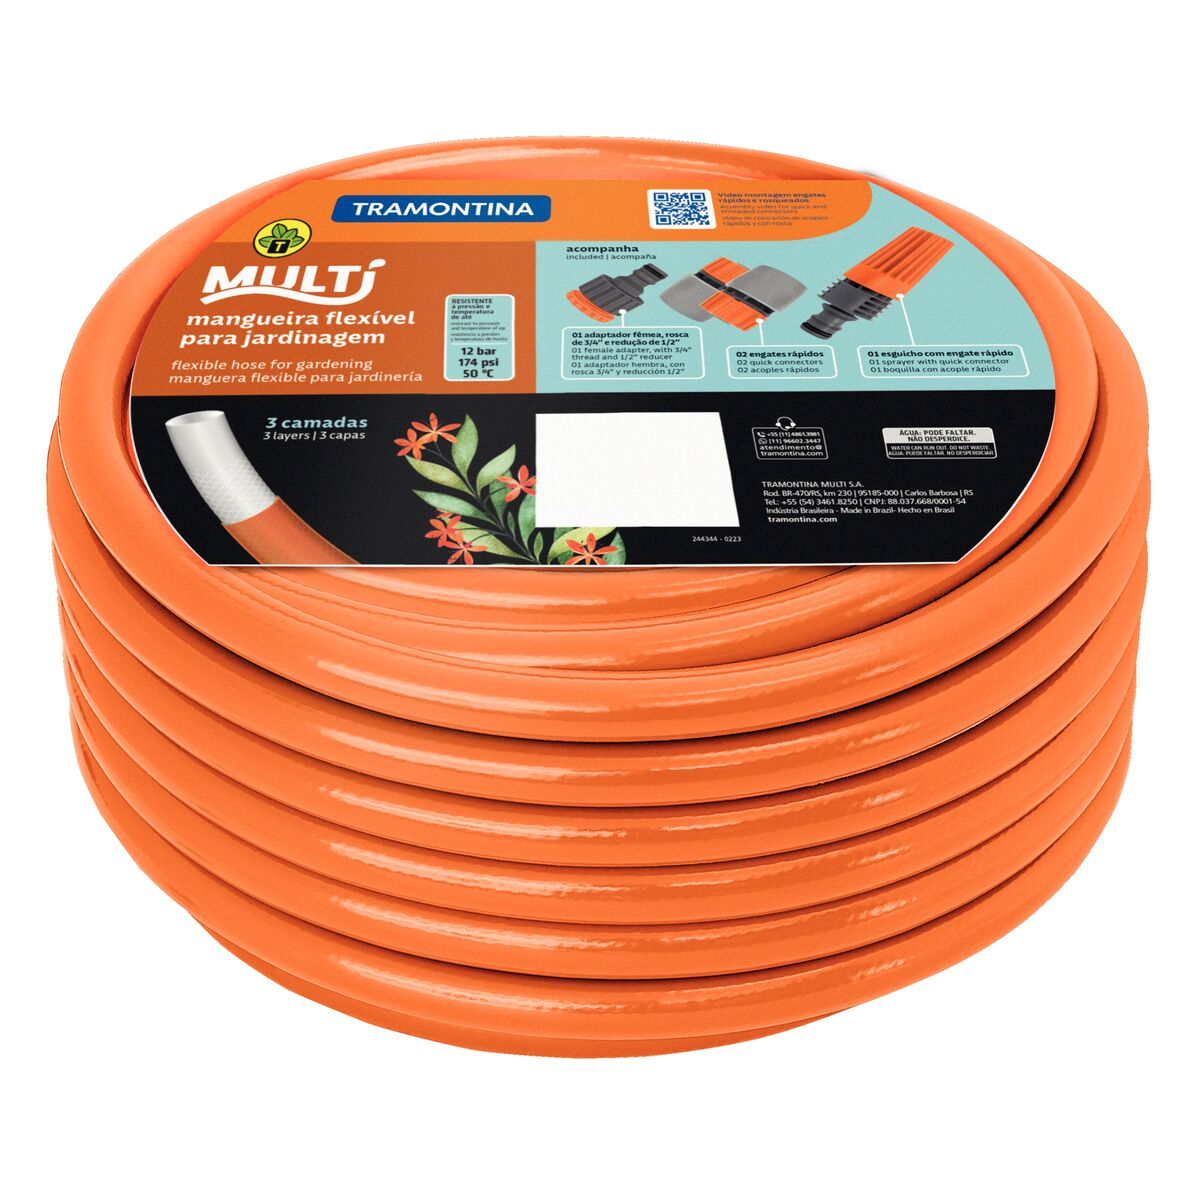 1/2" Super Flex garden hose, 10 m, quick connectors and sprayer